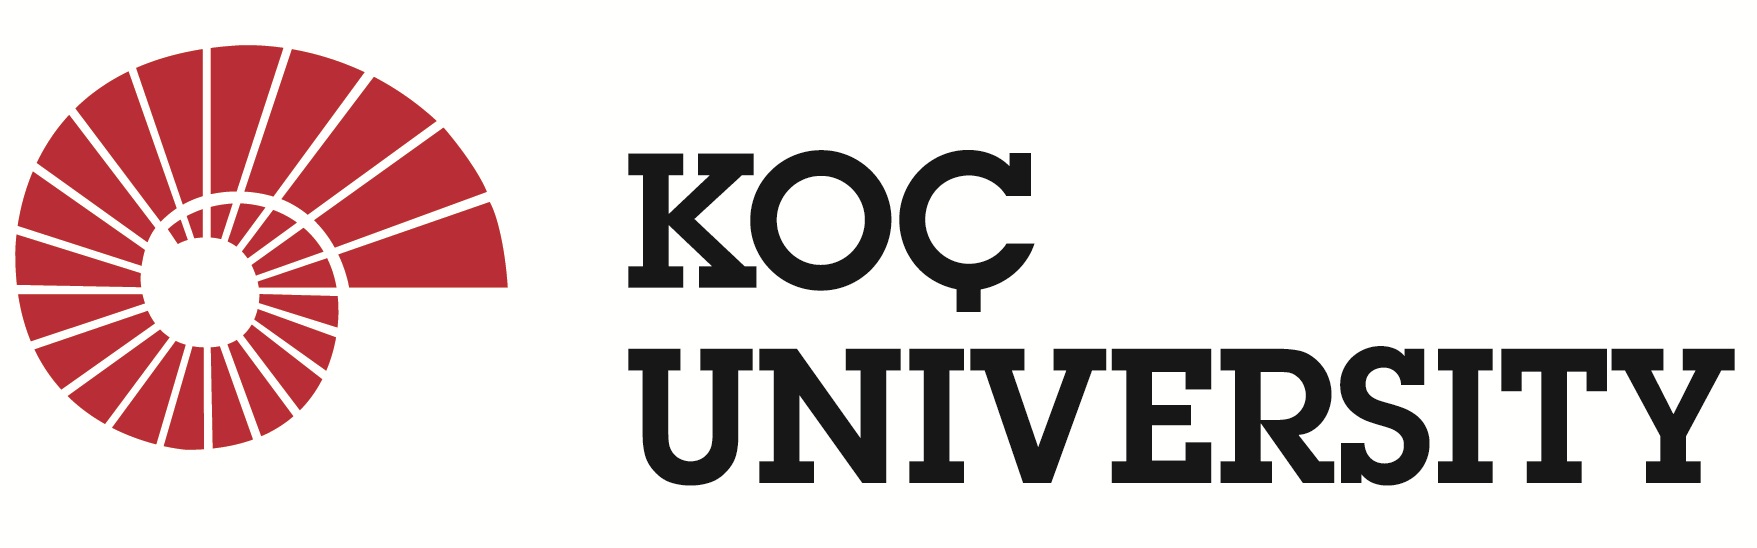 Koc-University